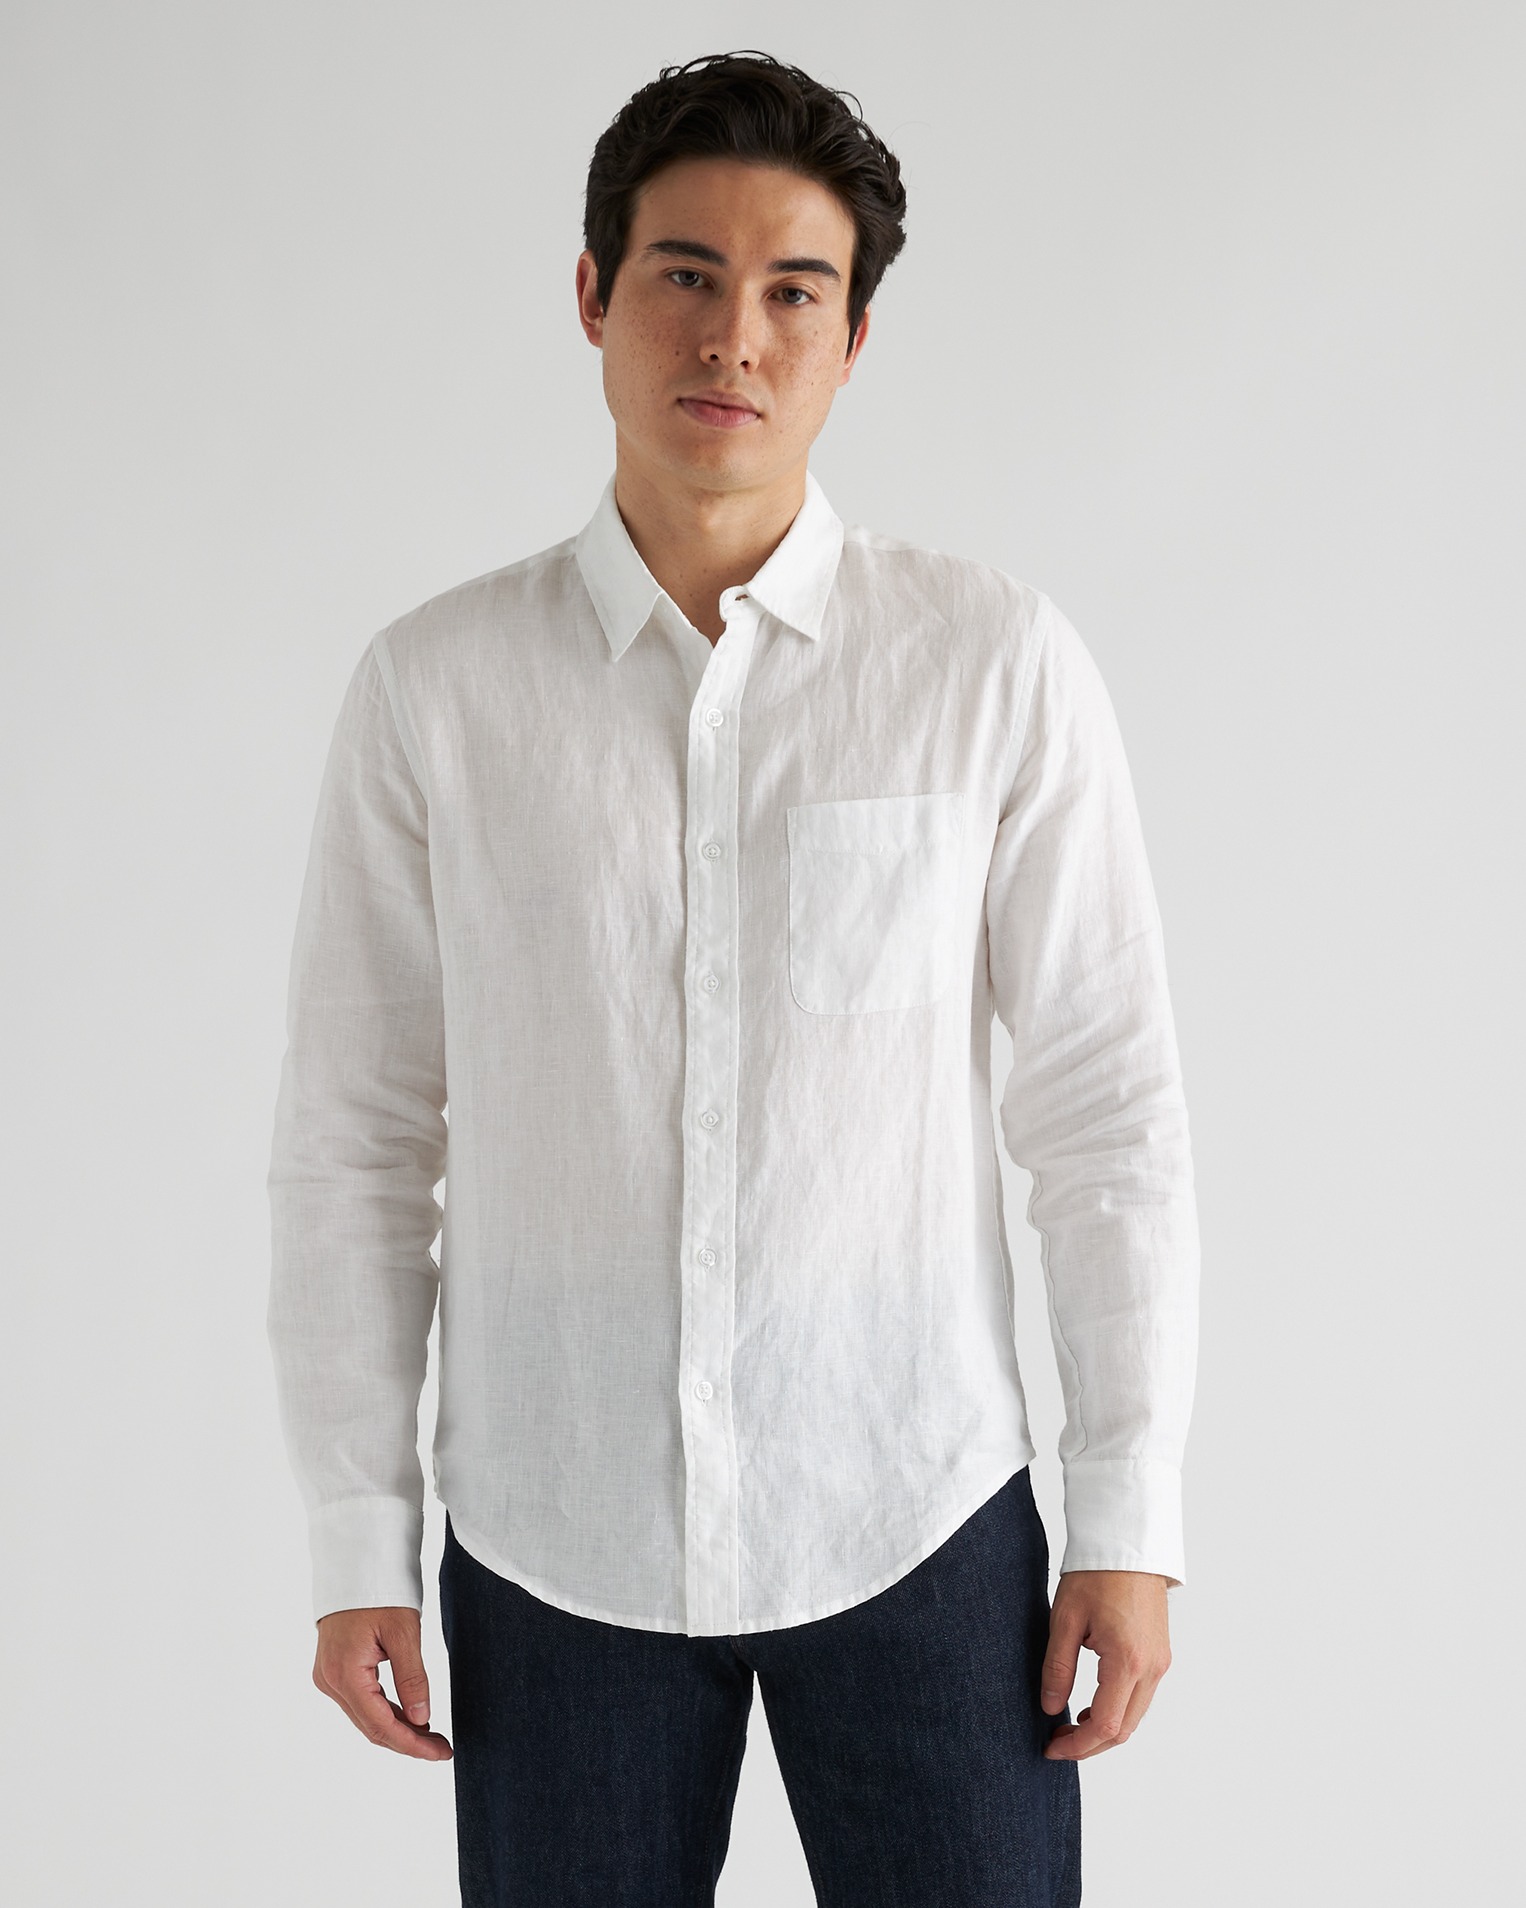 Quince Men's 100% European Linen Long Sleeve Pocket Shirt In White